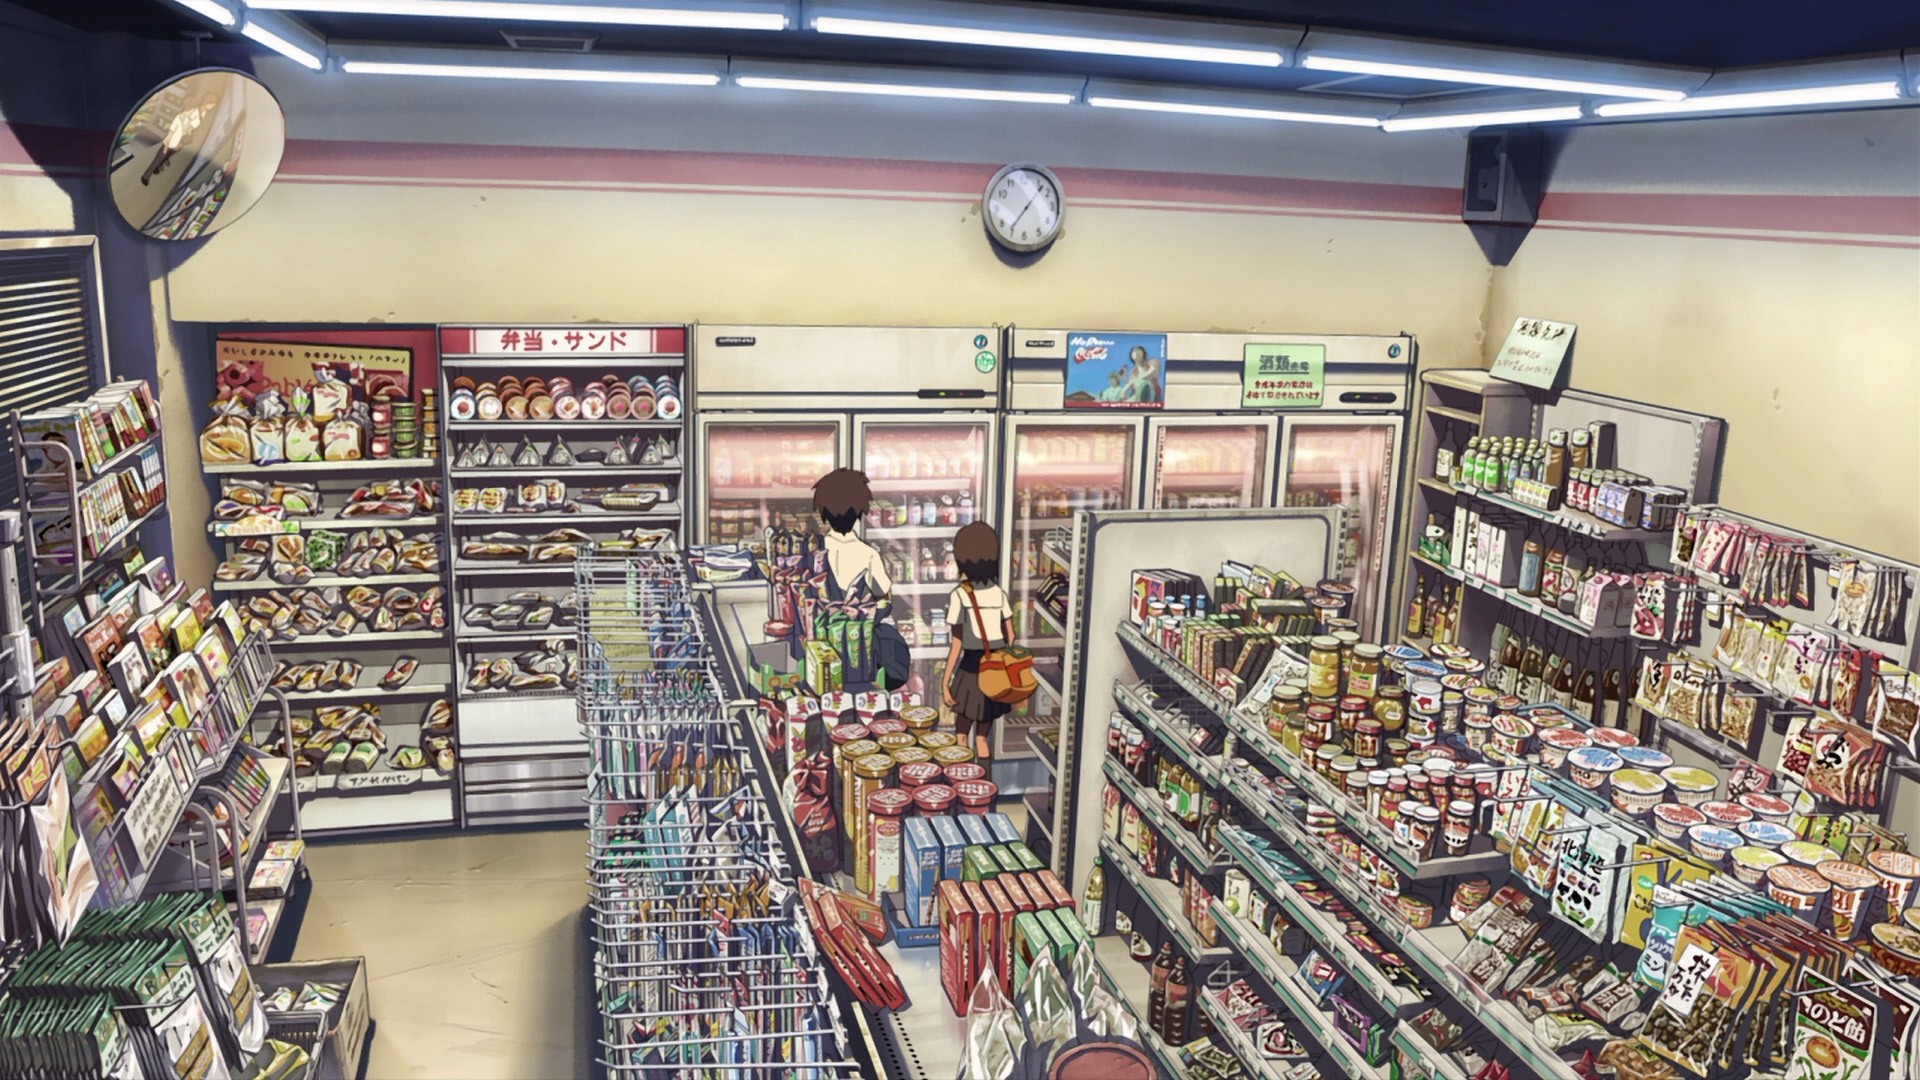 Makoto Shinkai 5 Centimeters Per Second Detailed Anime Super Market High Angle 1920x1080